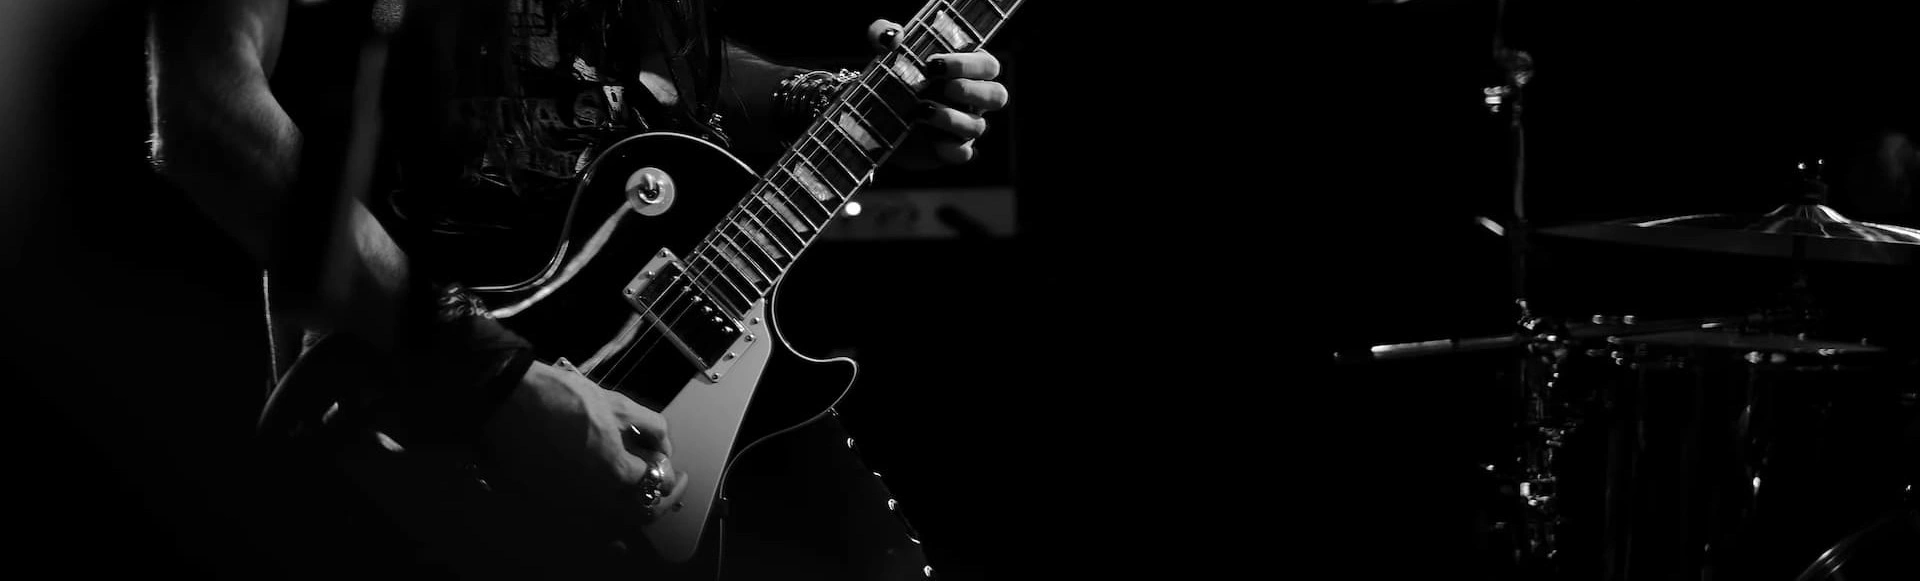 I like rock music. Рок. Красивый черный фон. Фото с Soundcheck.